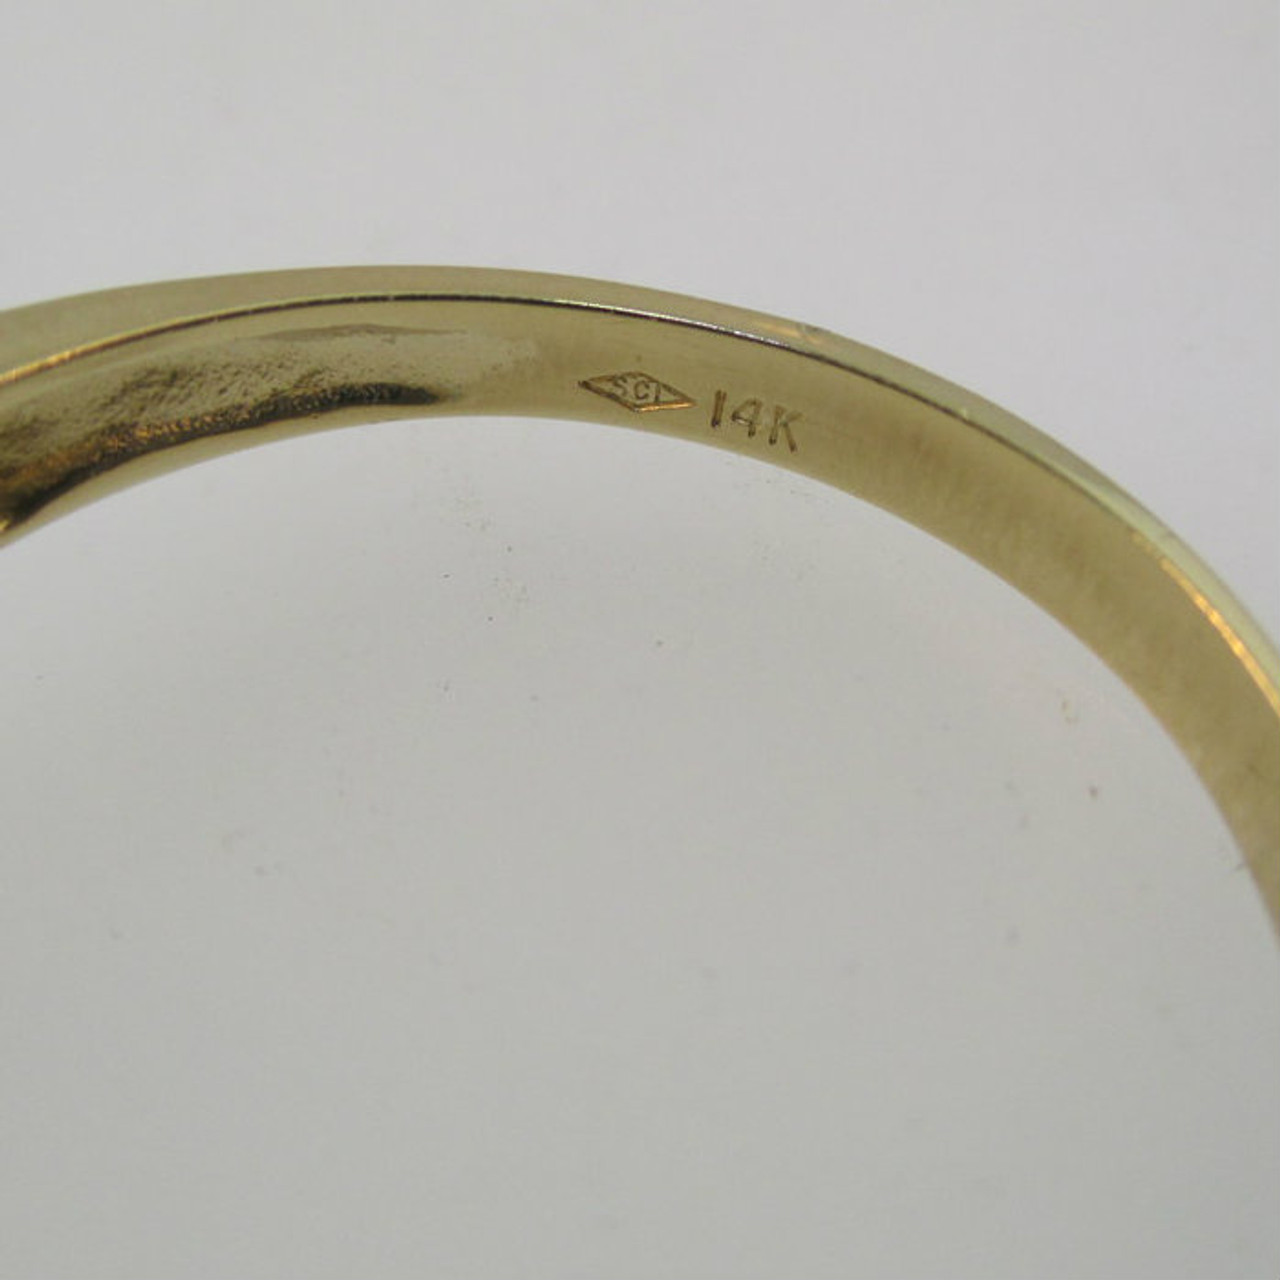 14k Yellow Gold Citrine Emerald Cut Ring Size 9